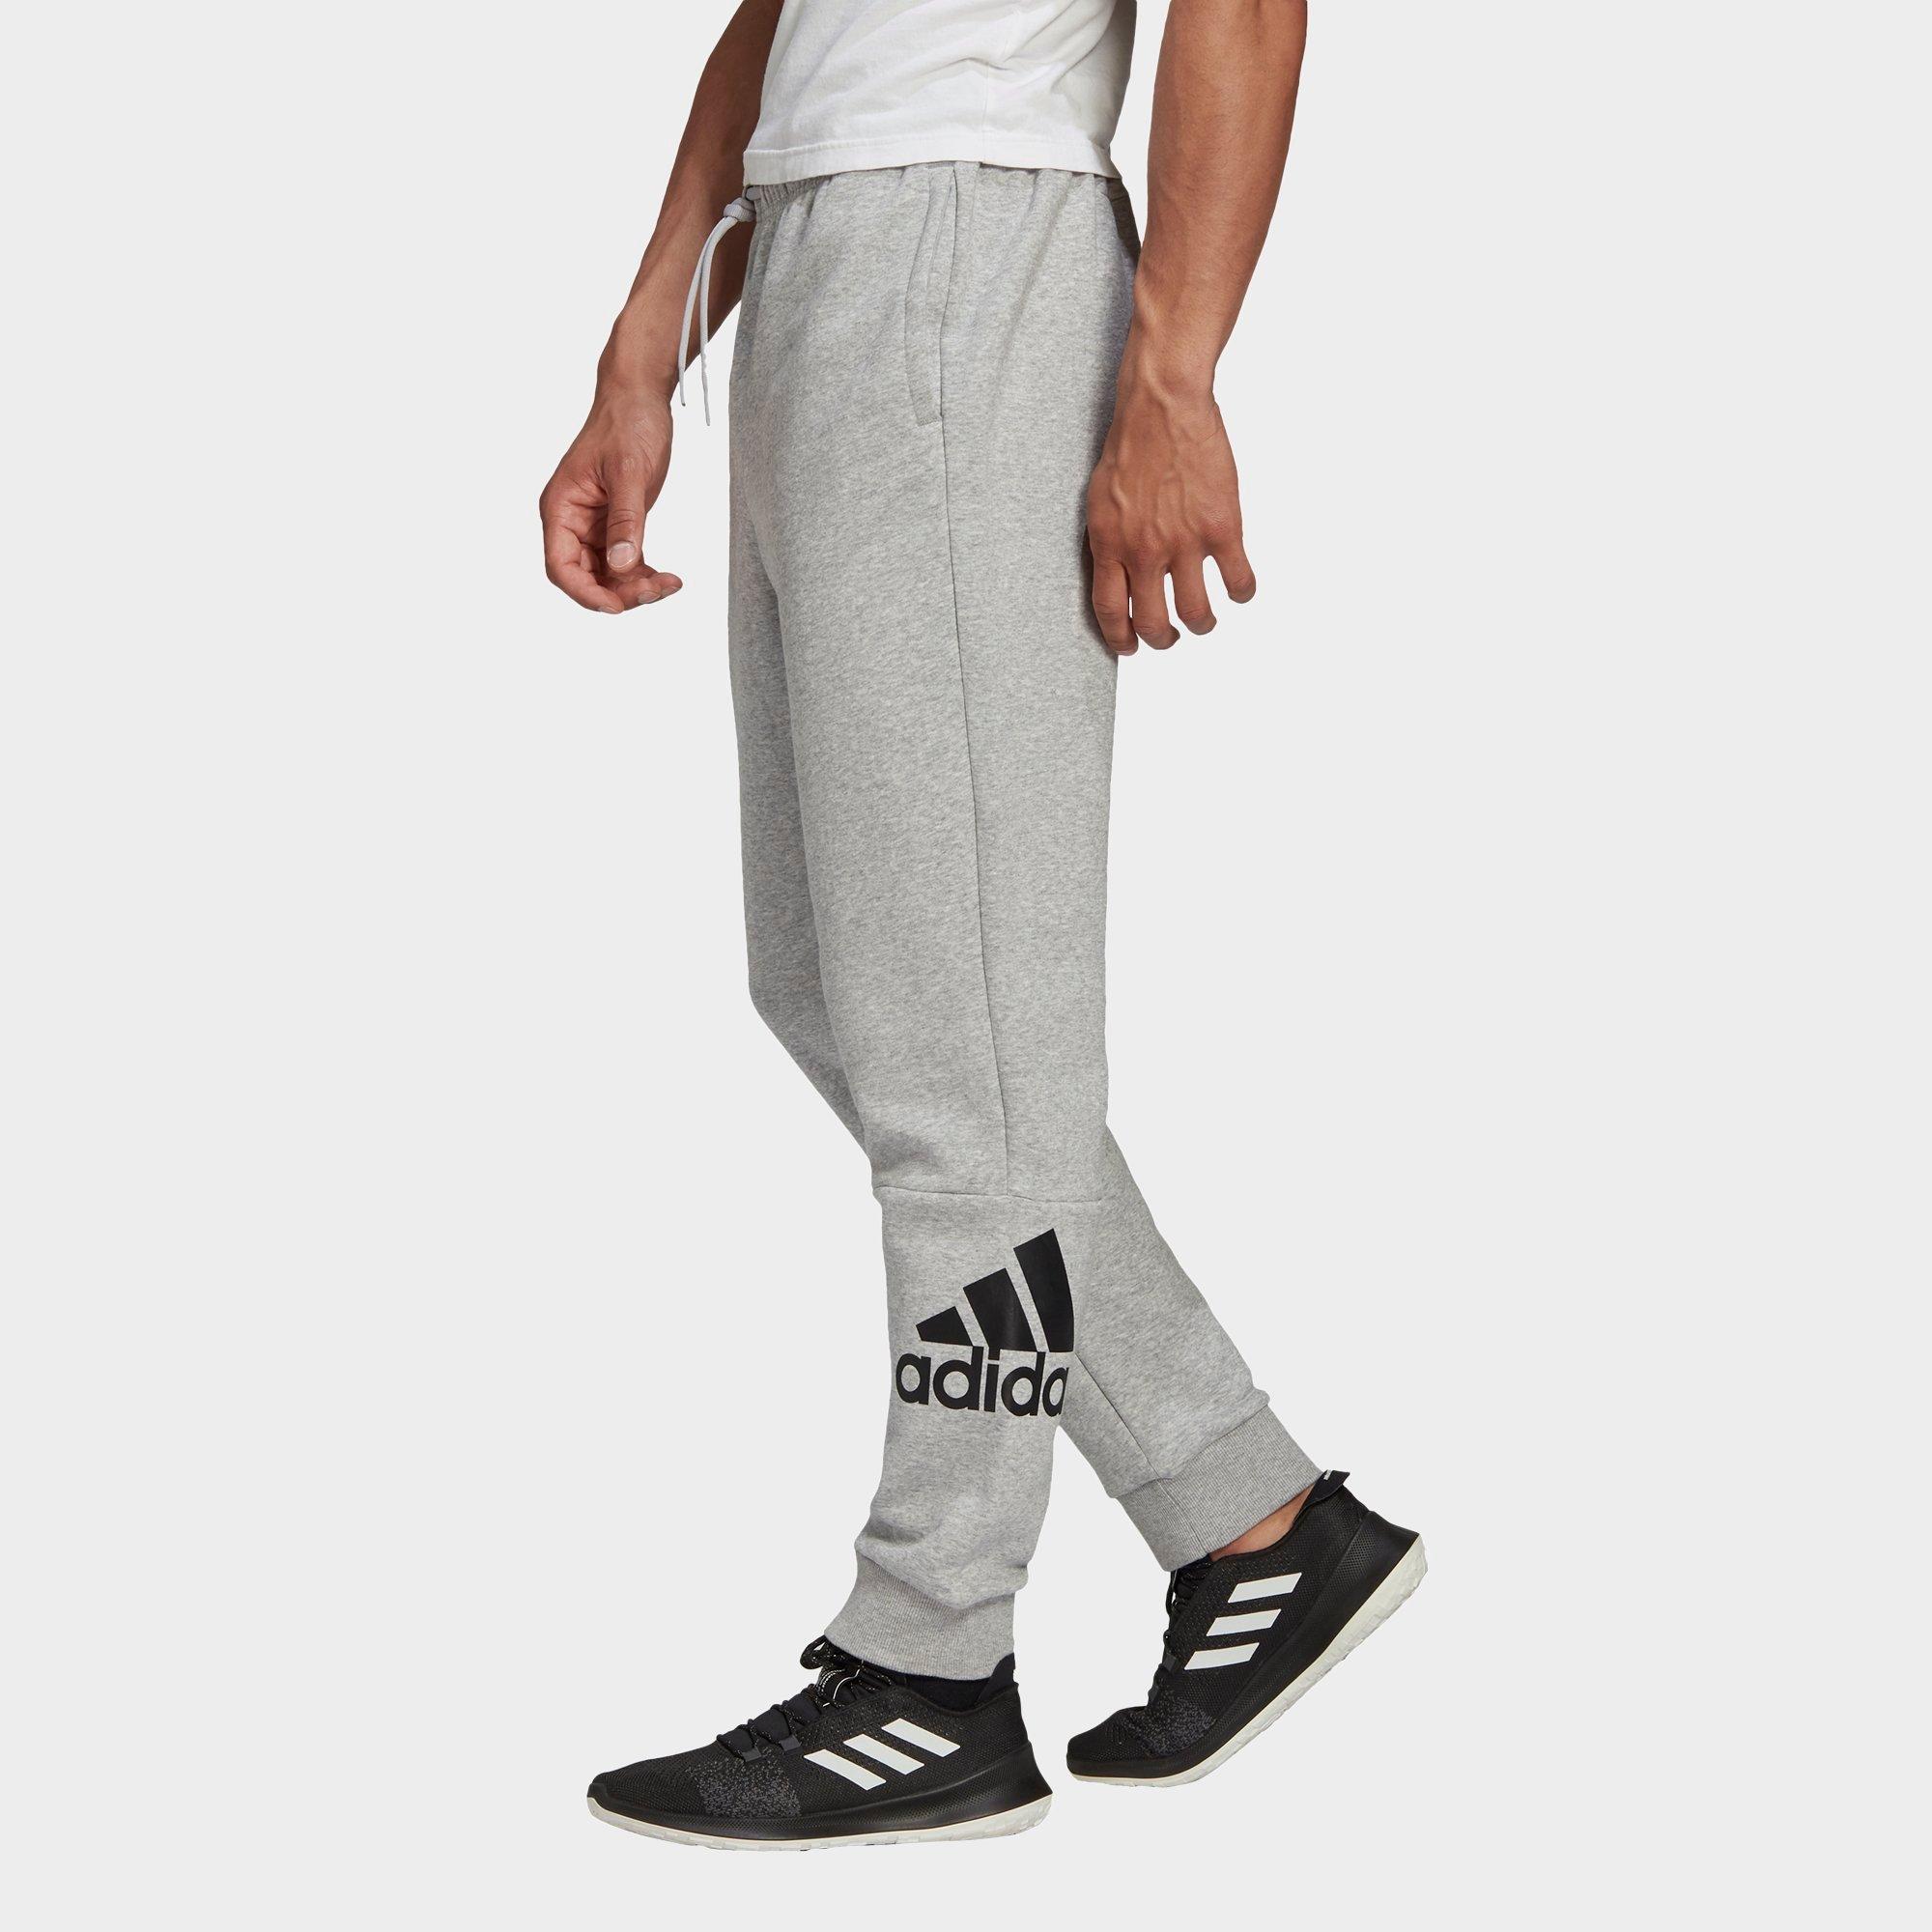 adidas fleece track pants mens